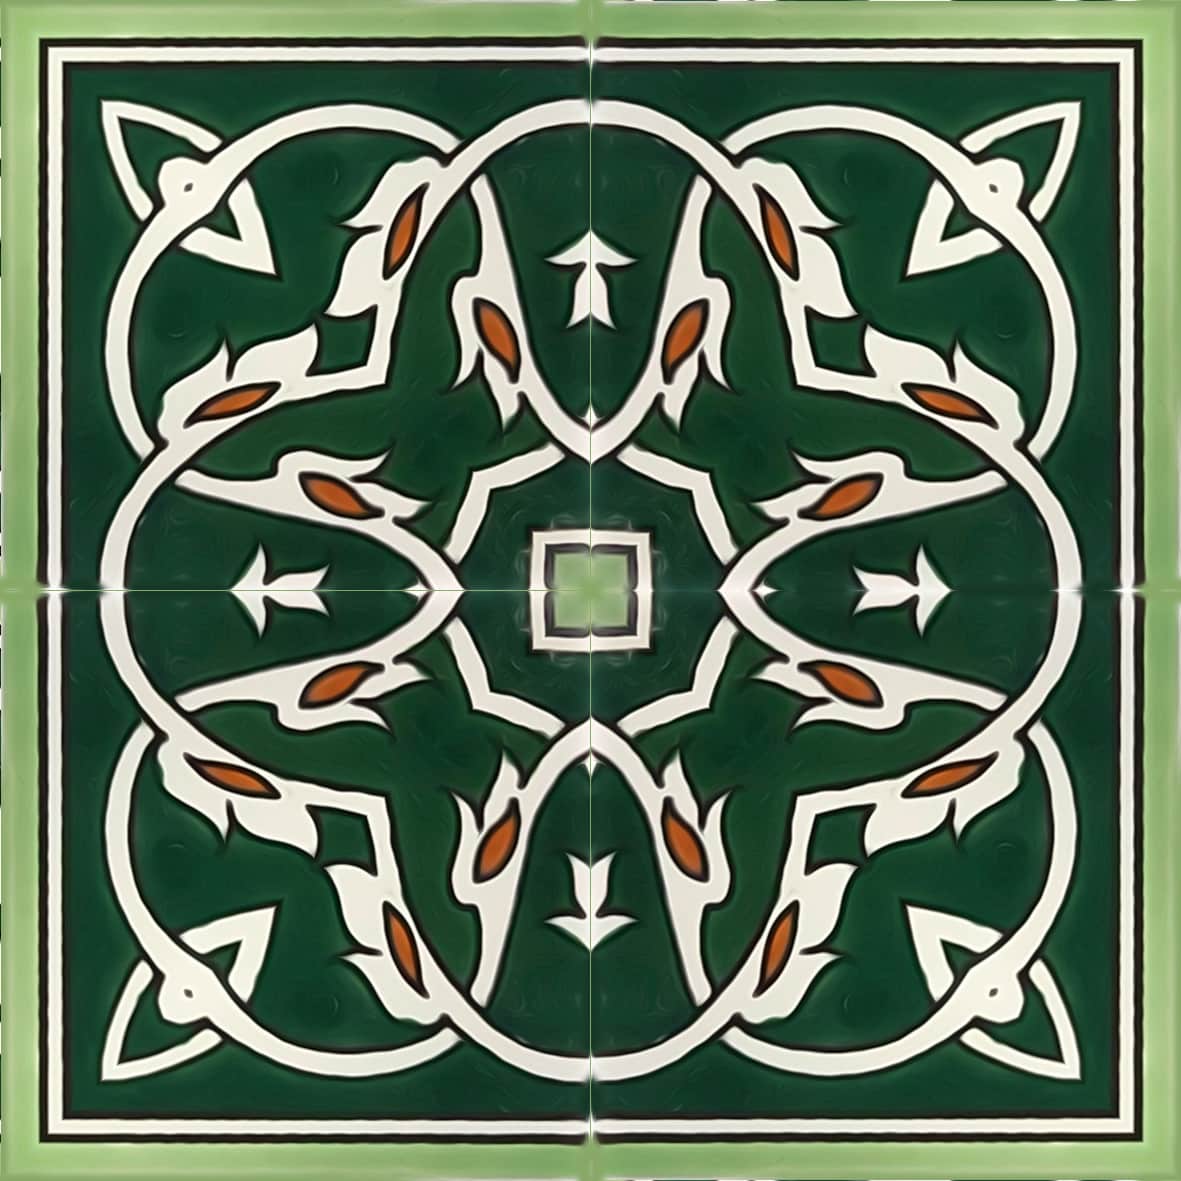 Chain Green tile pattern